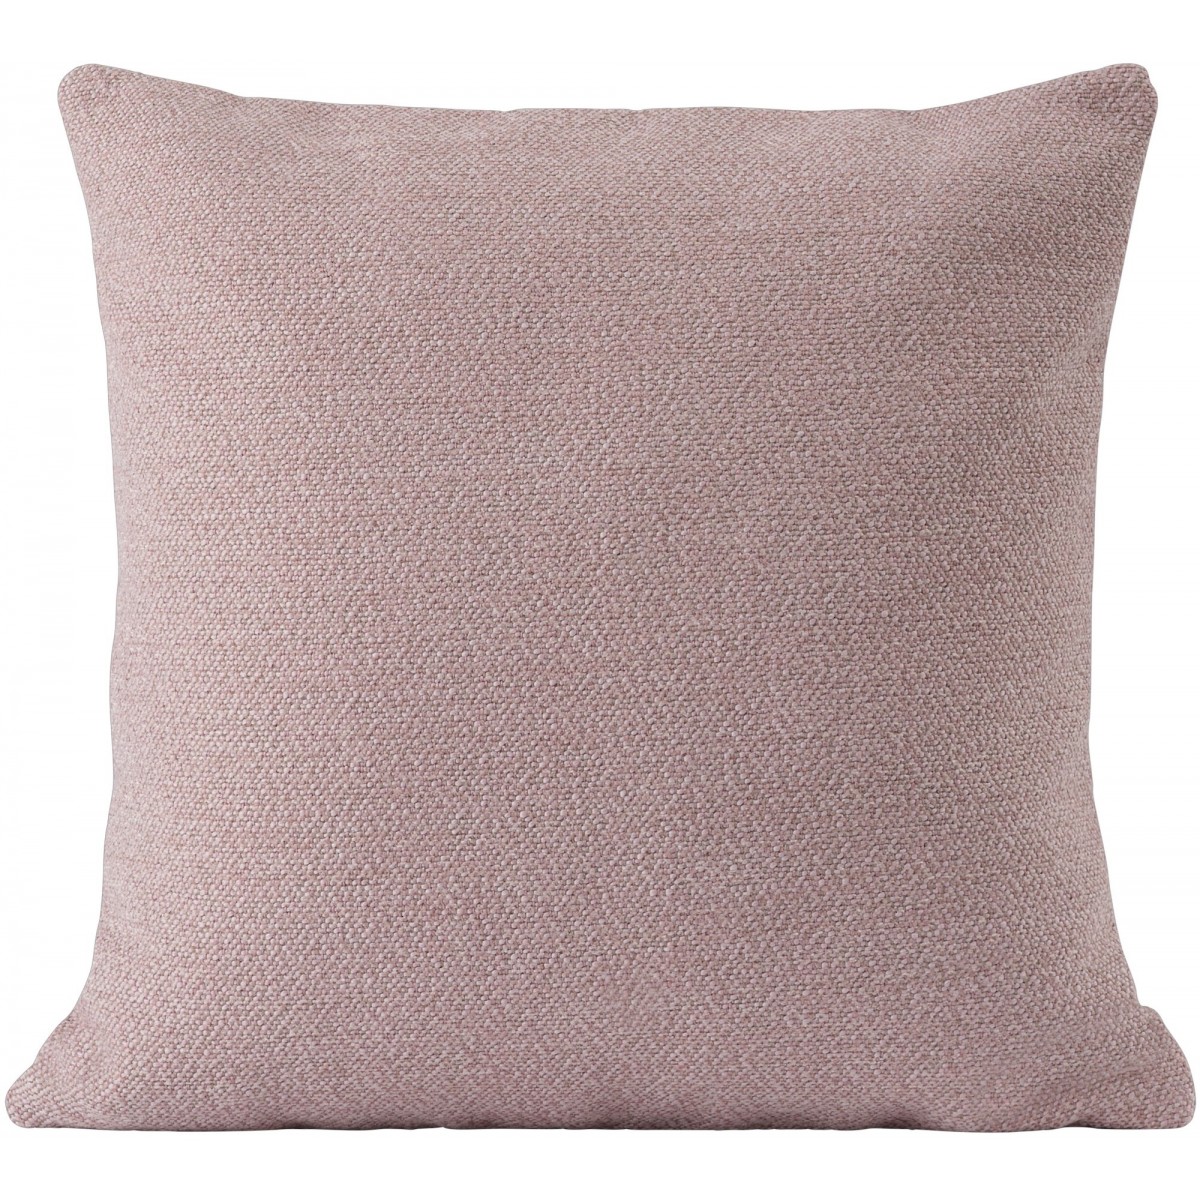 Rose/Petroleum – 45 x 45 cm – Mingle cushion